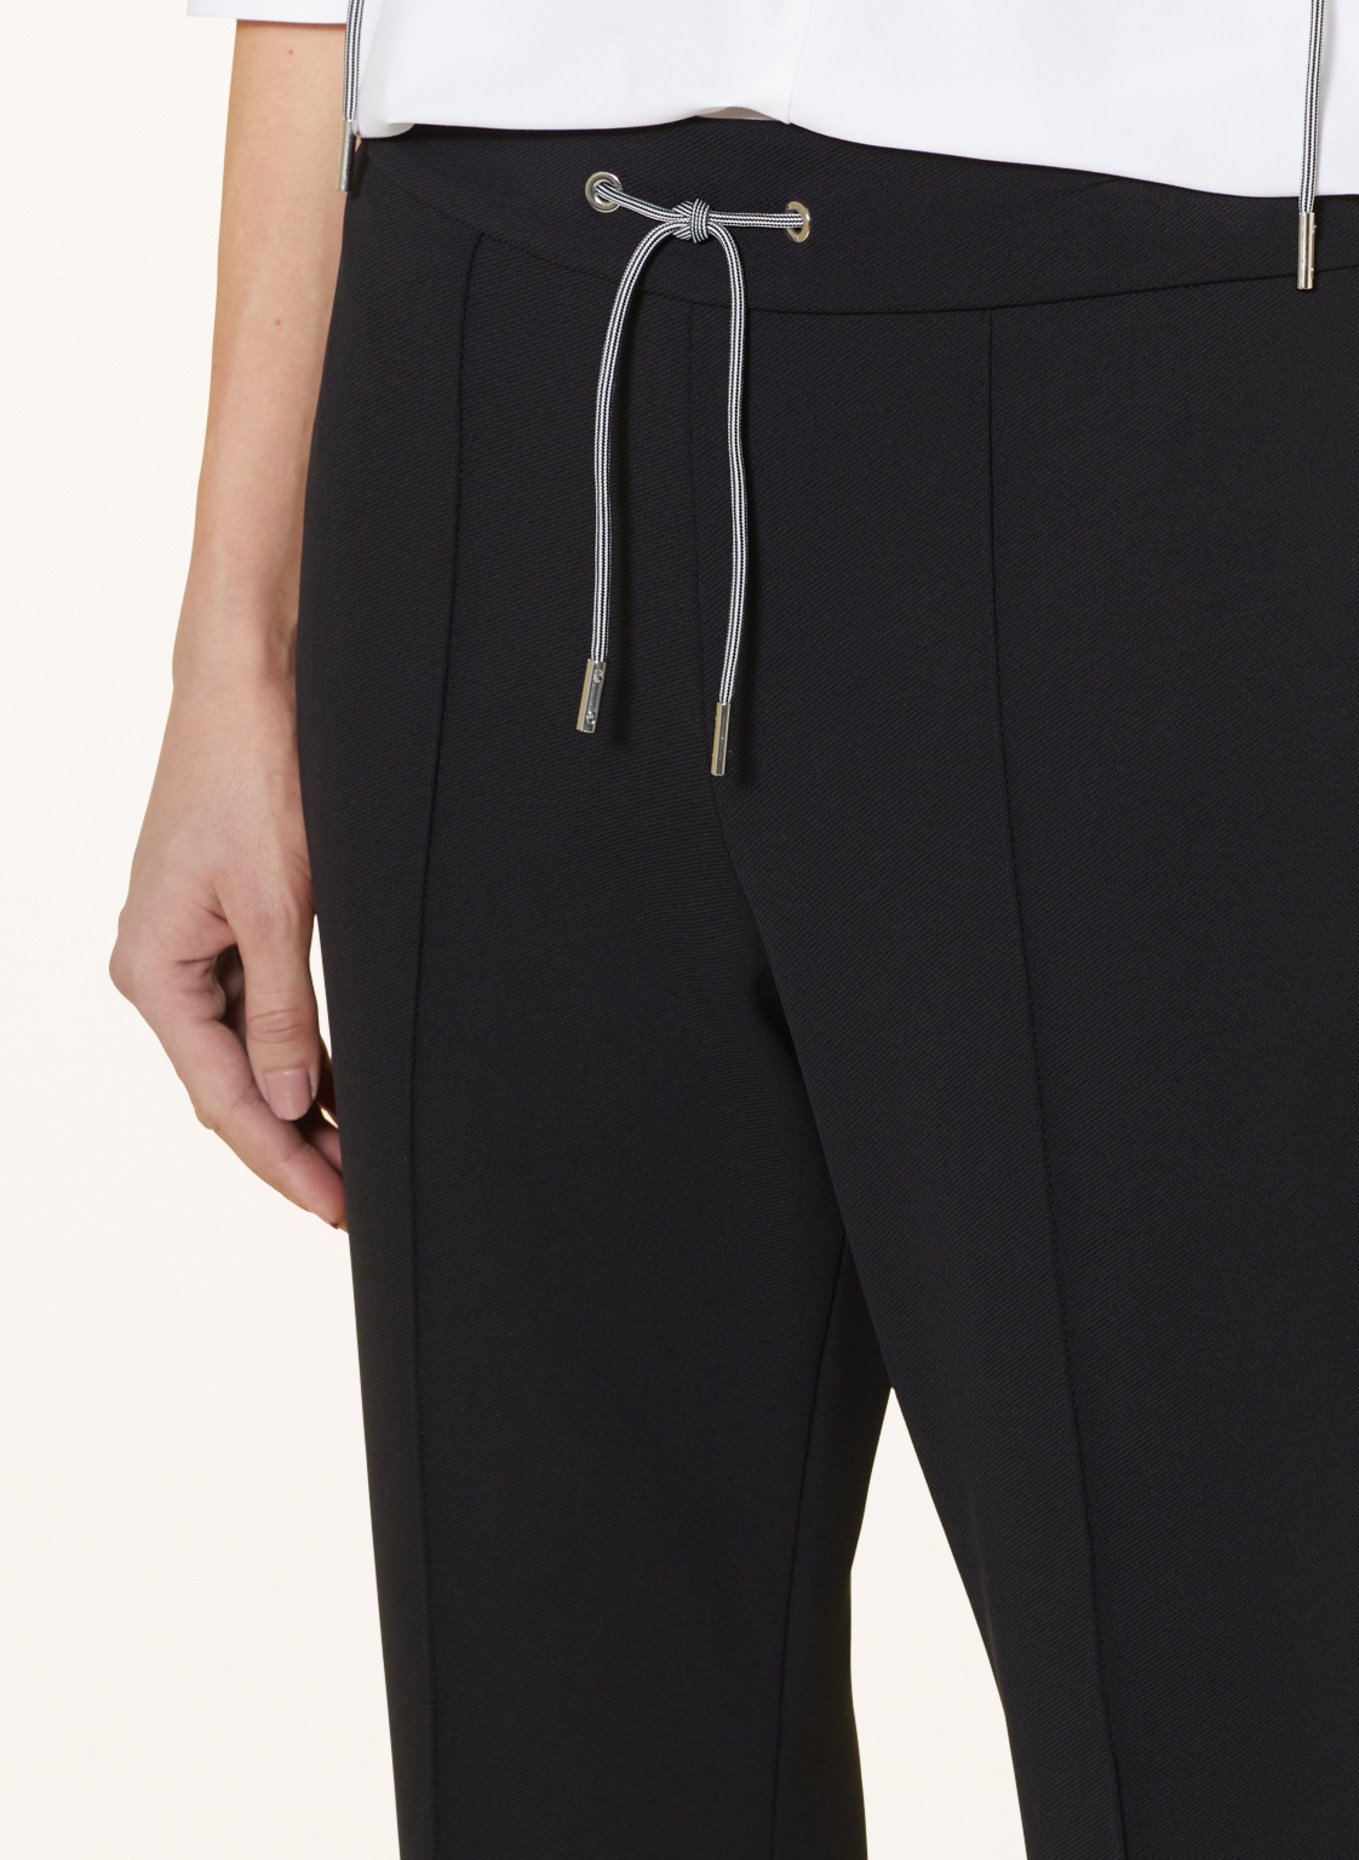 ULLI EHRLICH SPORTALM Pants in jogger style, Color: BLACK (Image 5)